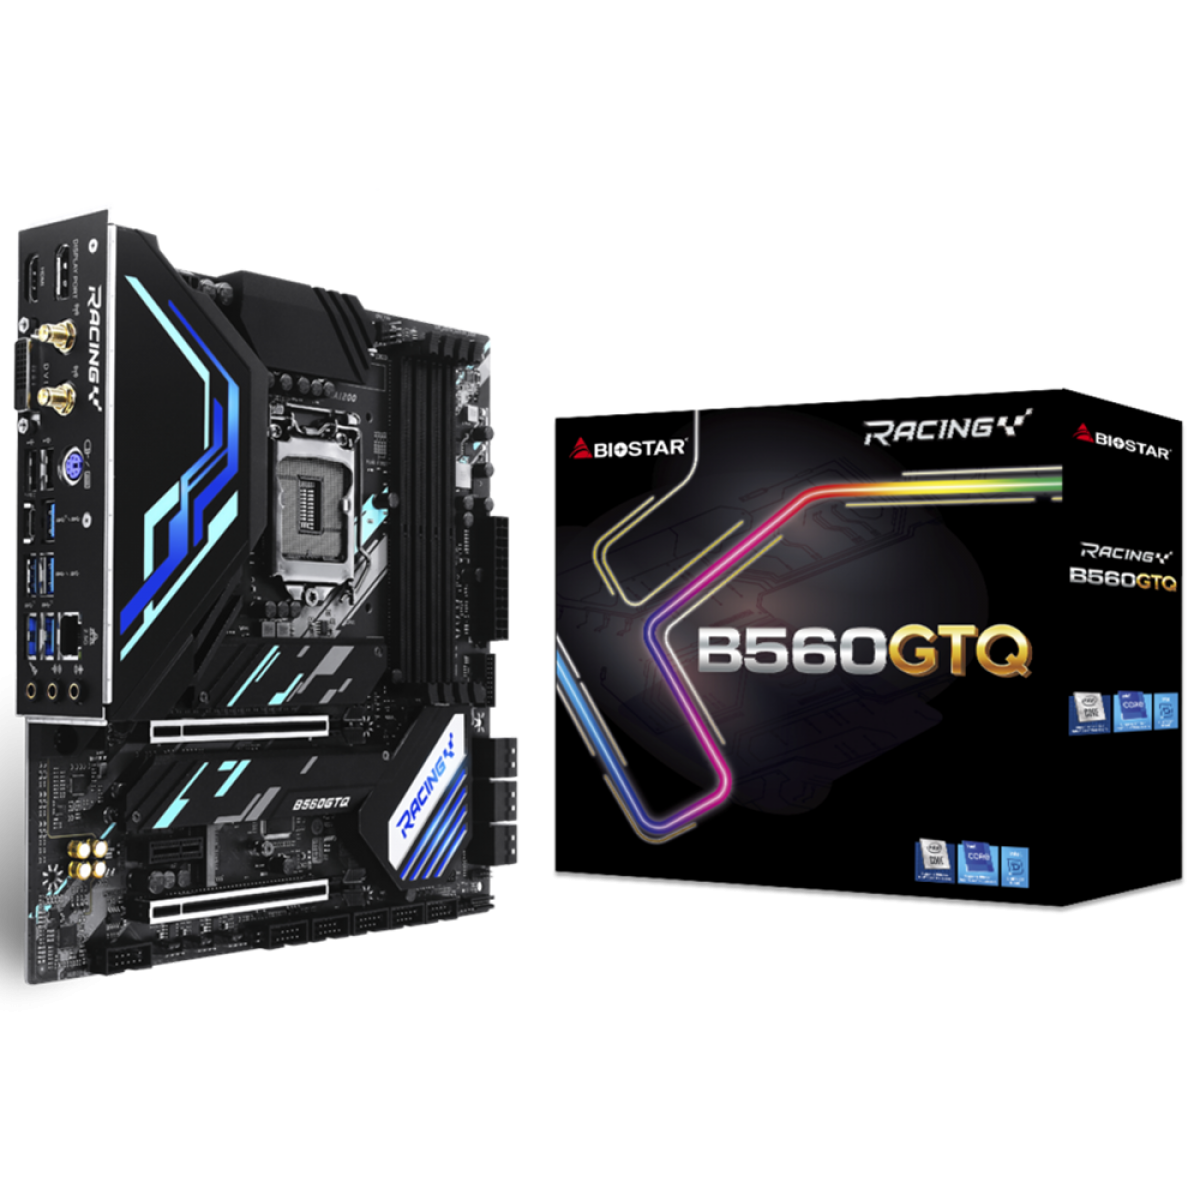 Biostar Racing B560GTQ, Chipset B560, Intel LGA 1200, MATX, DDR4